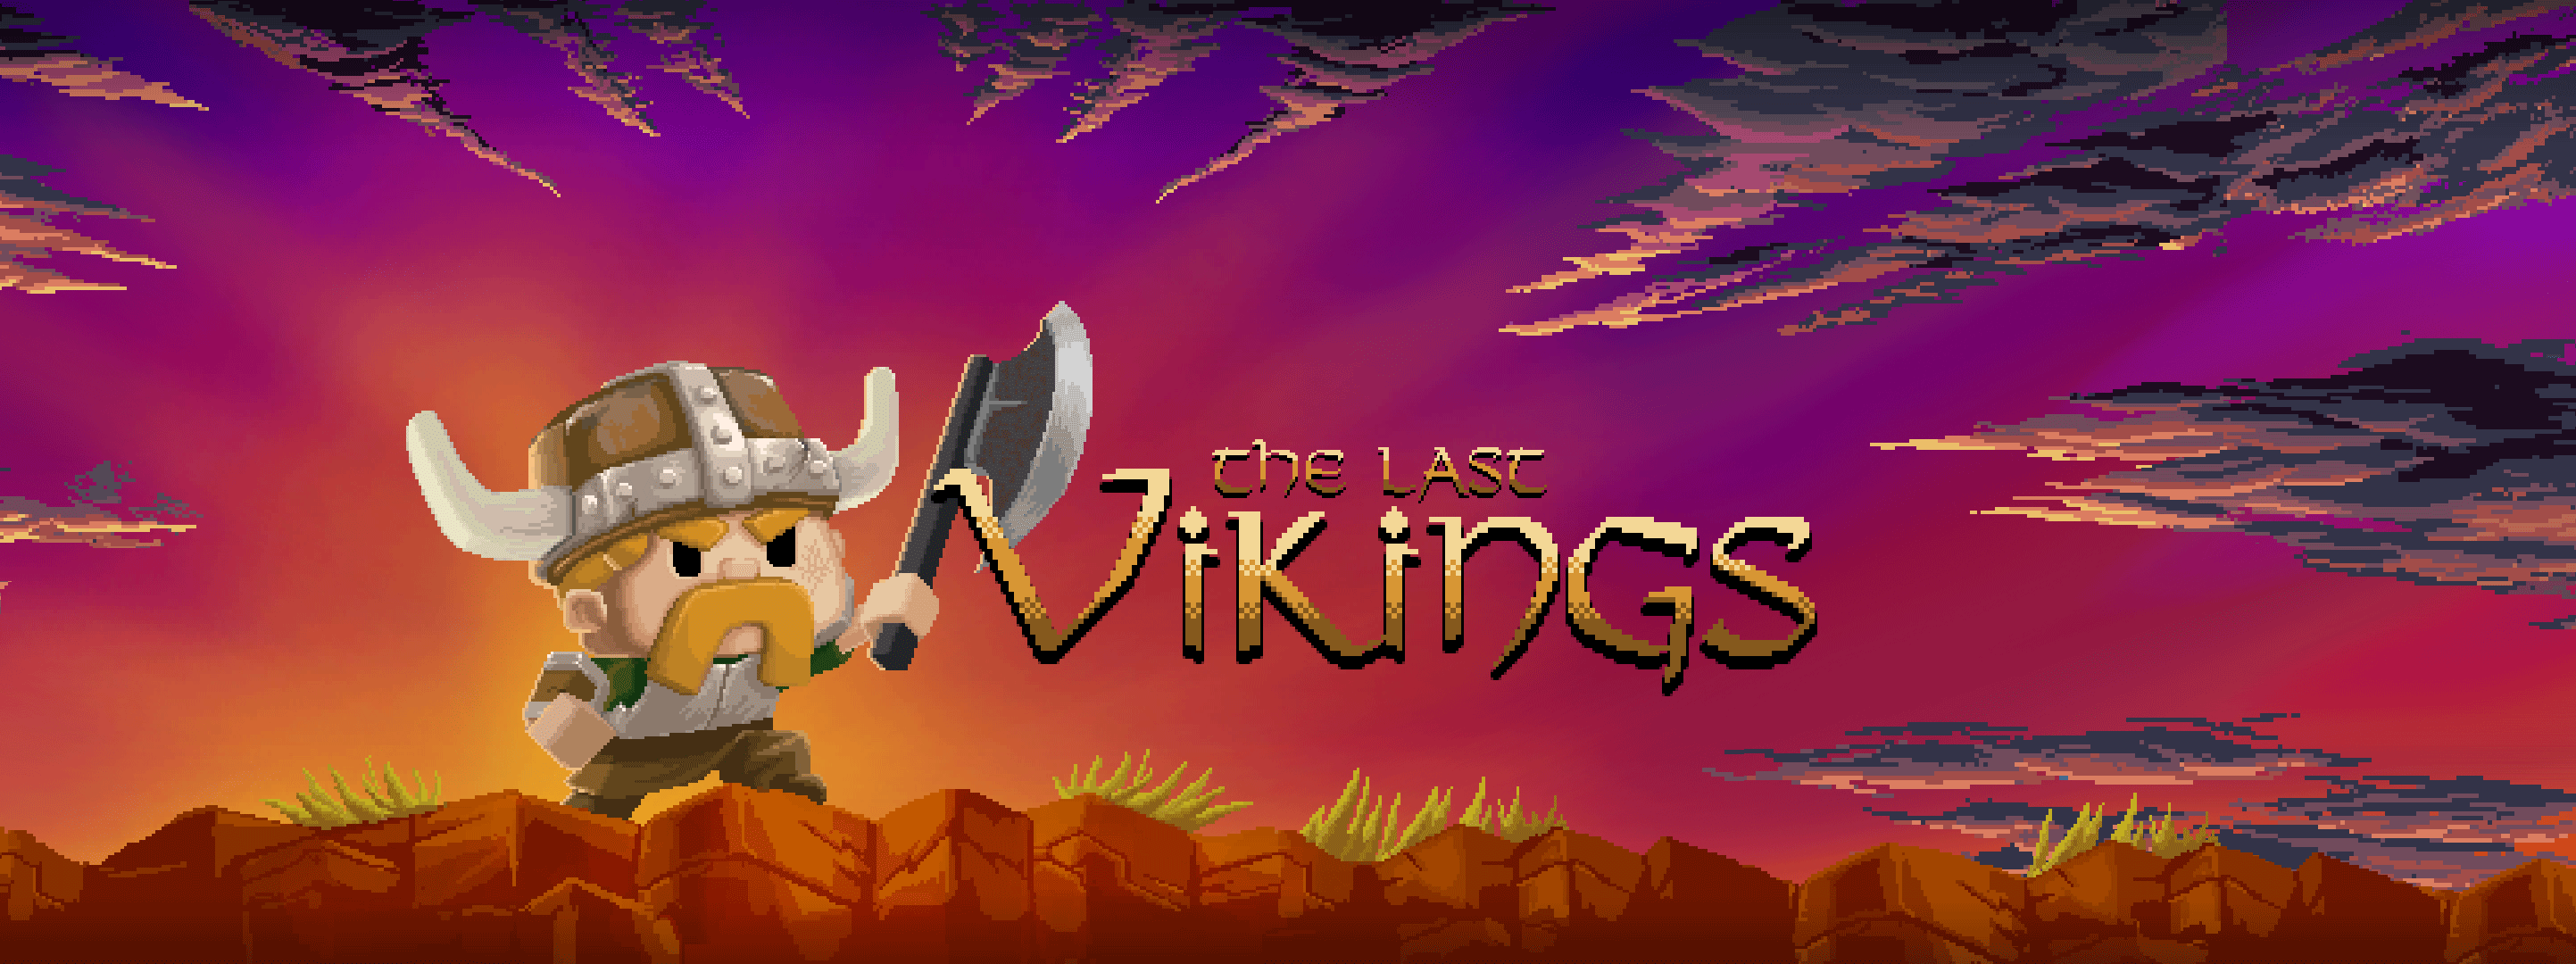 vikings game reddit